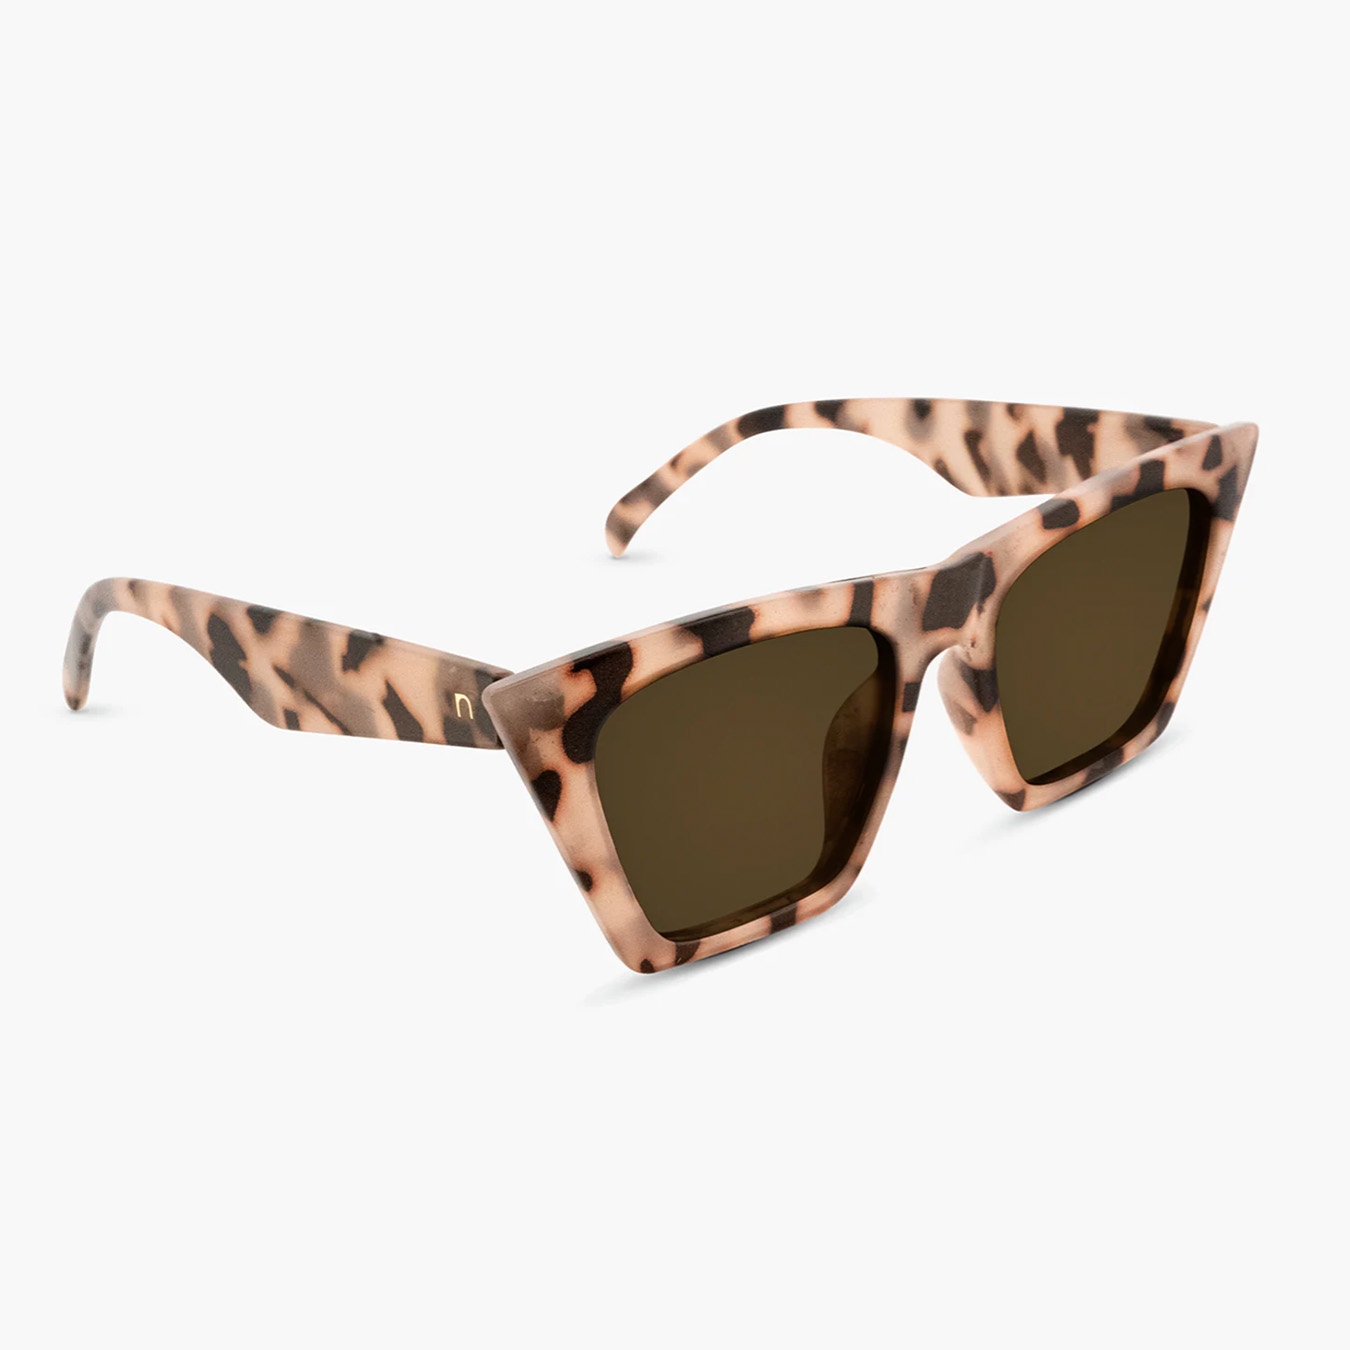 Hamptons Polarized Sunglasses